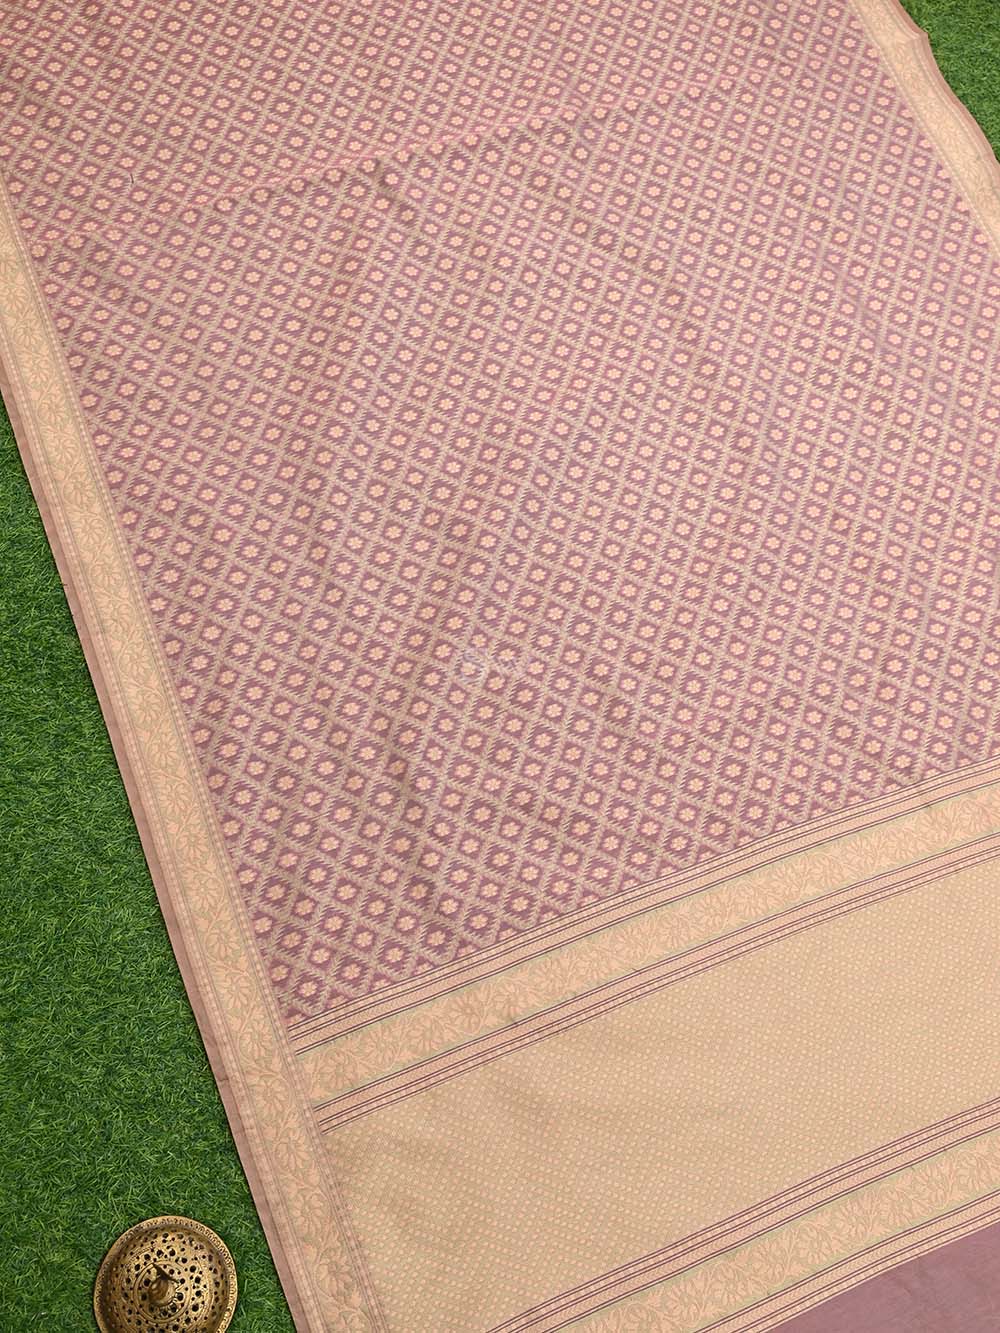 Dusty Pink Stripe Cotton Silk Handloom Banarasi Saree - Sacred Weaves